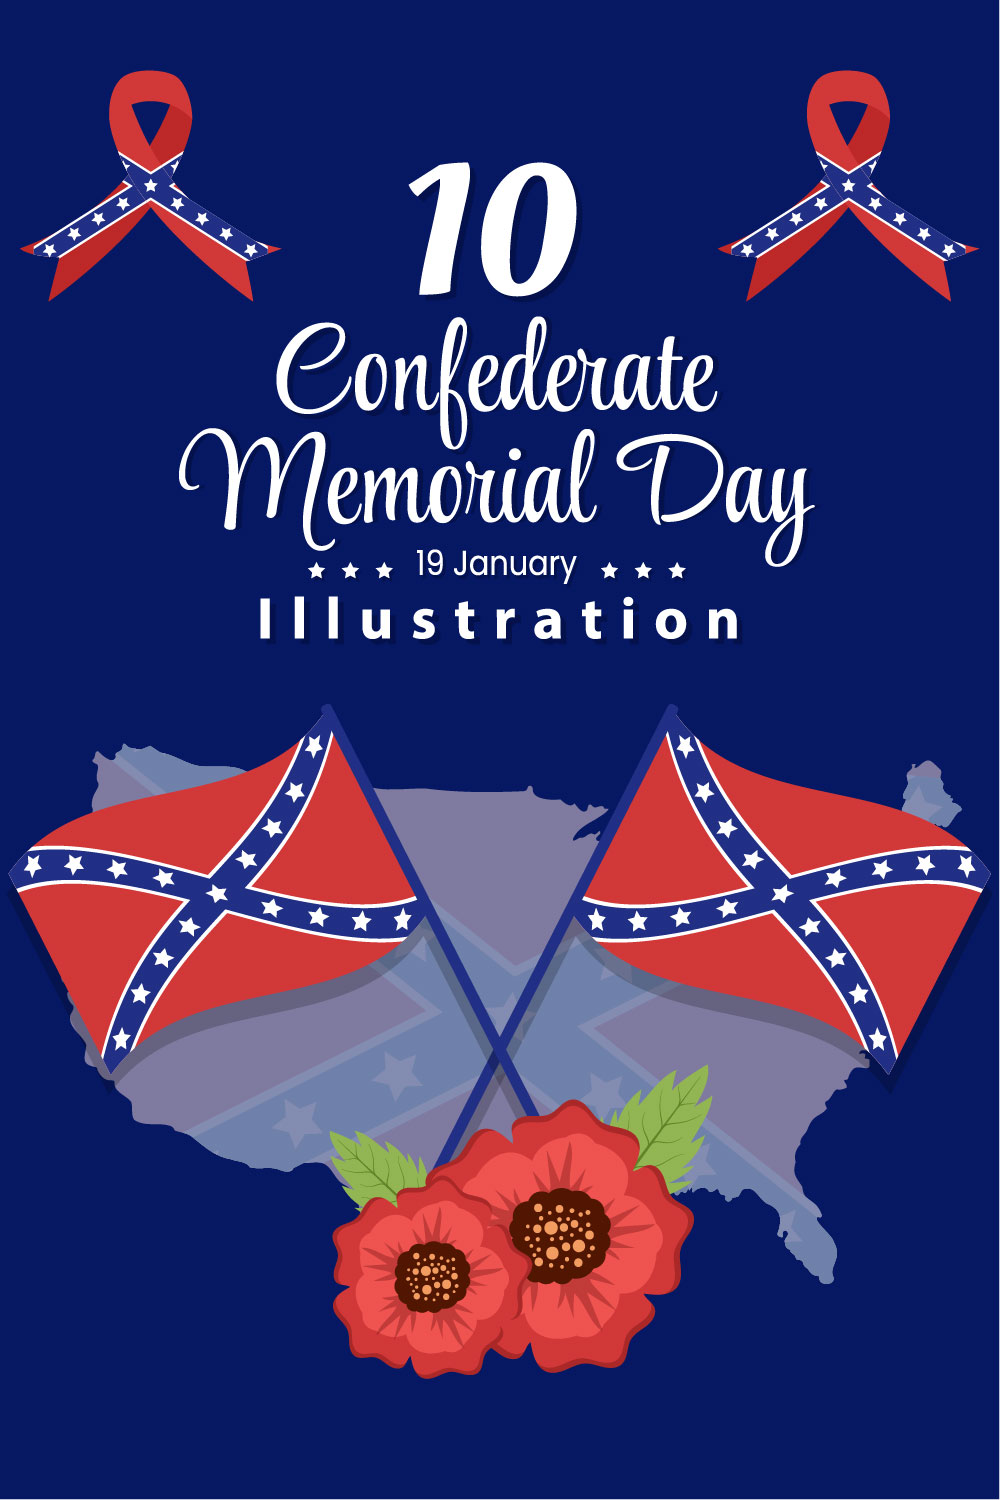 10 Confederate Memorial Day Illustration pinterest image.